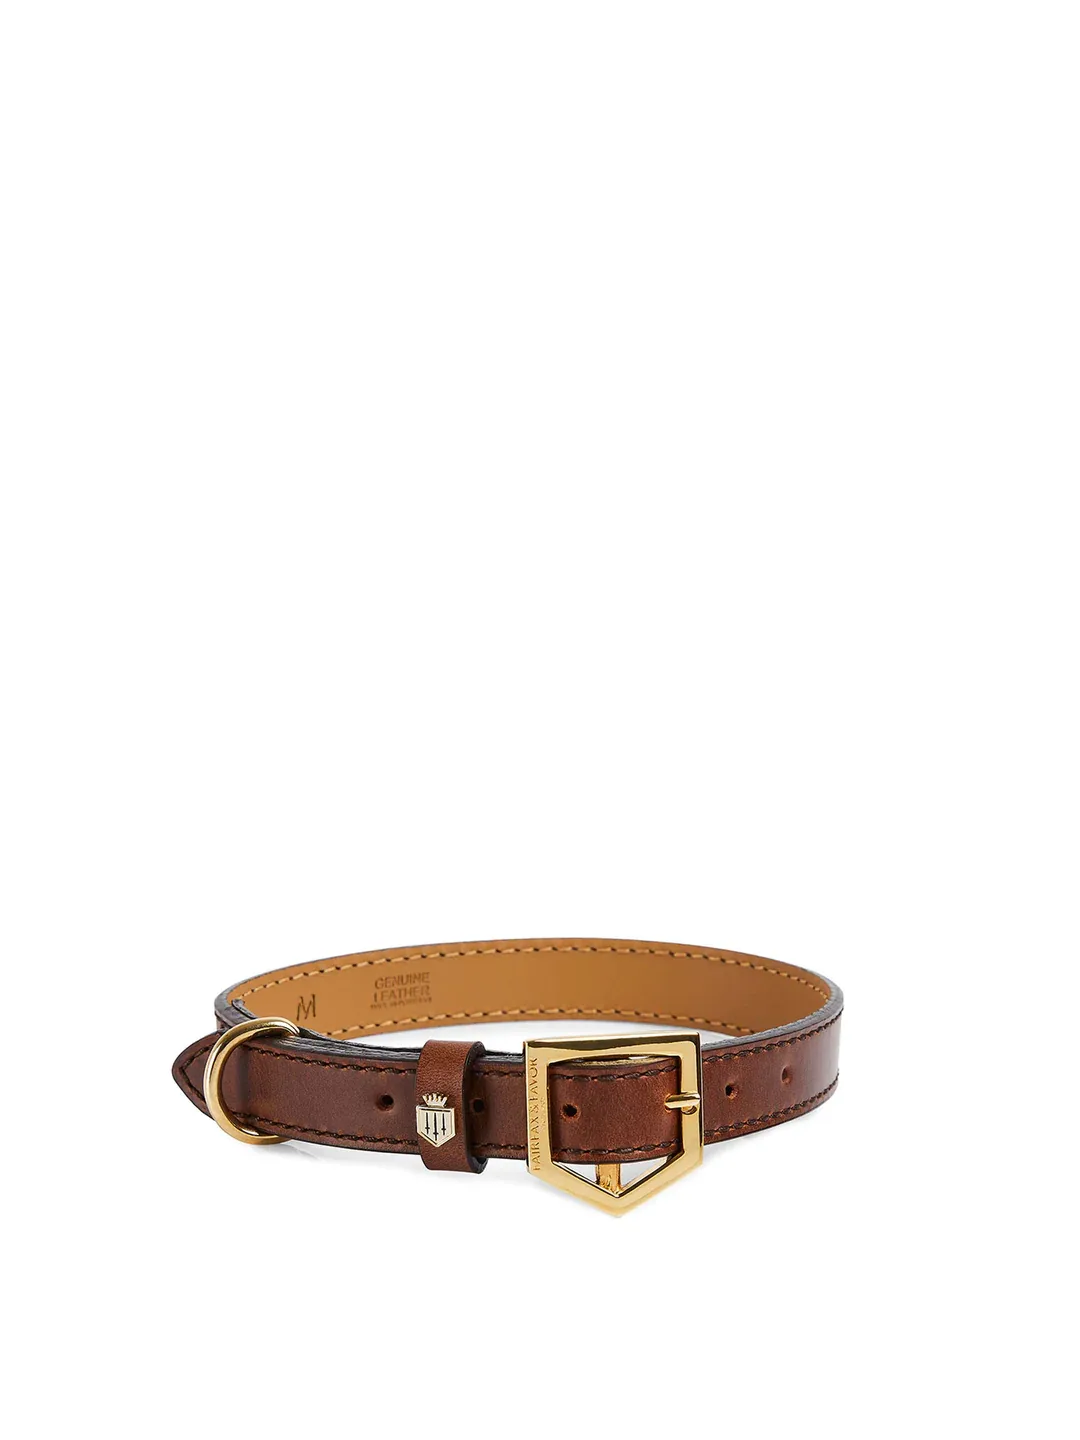 Fitzroy – Tan Leather Dog Collar